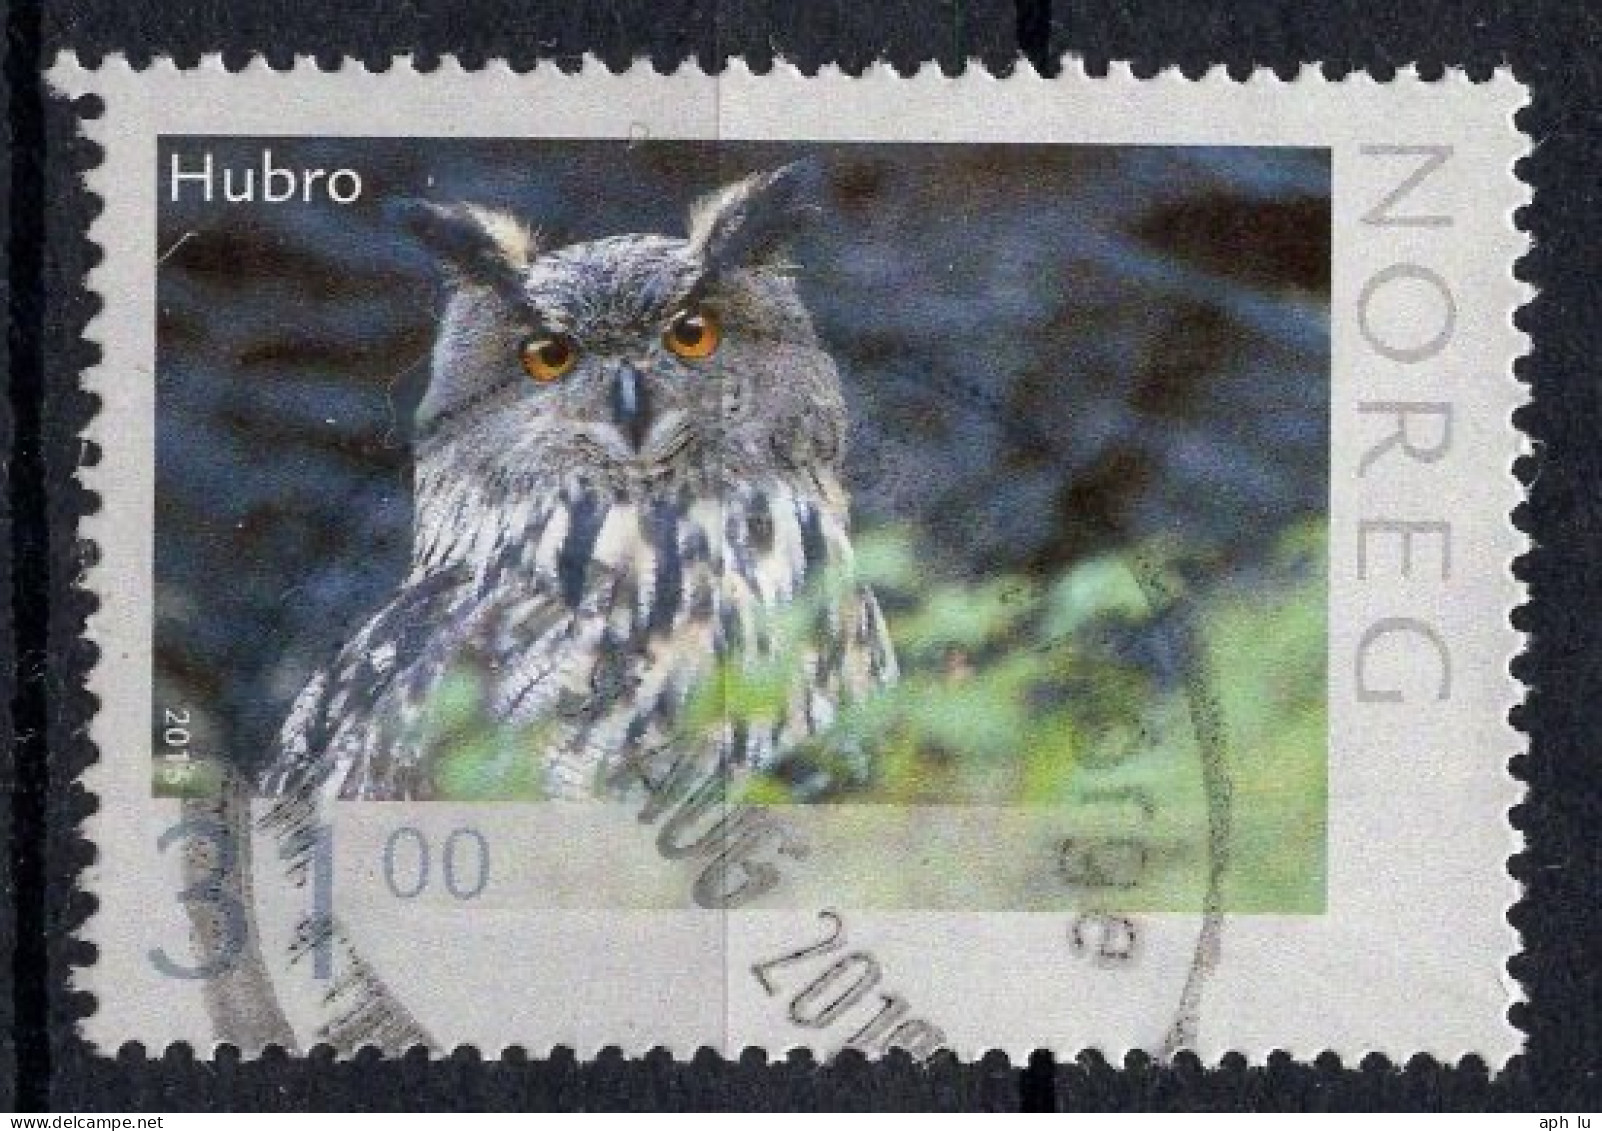 Marke Gestempelt (h300301) - Used Stamps